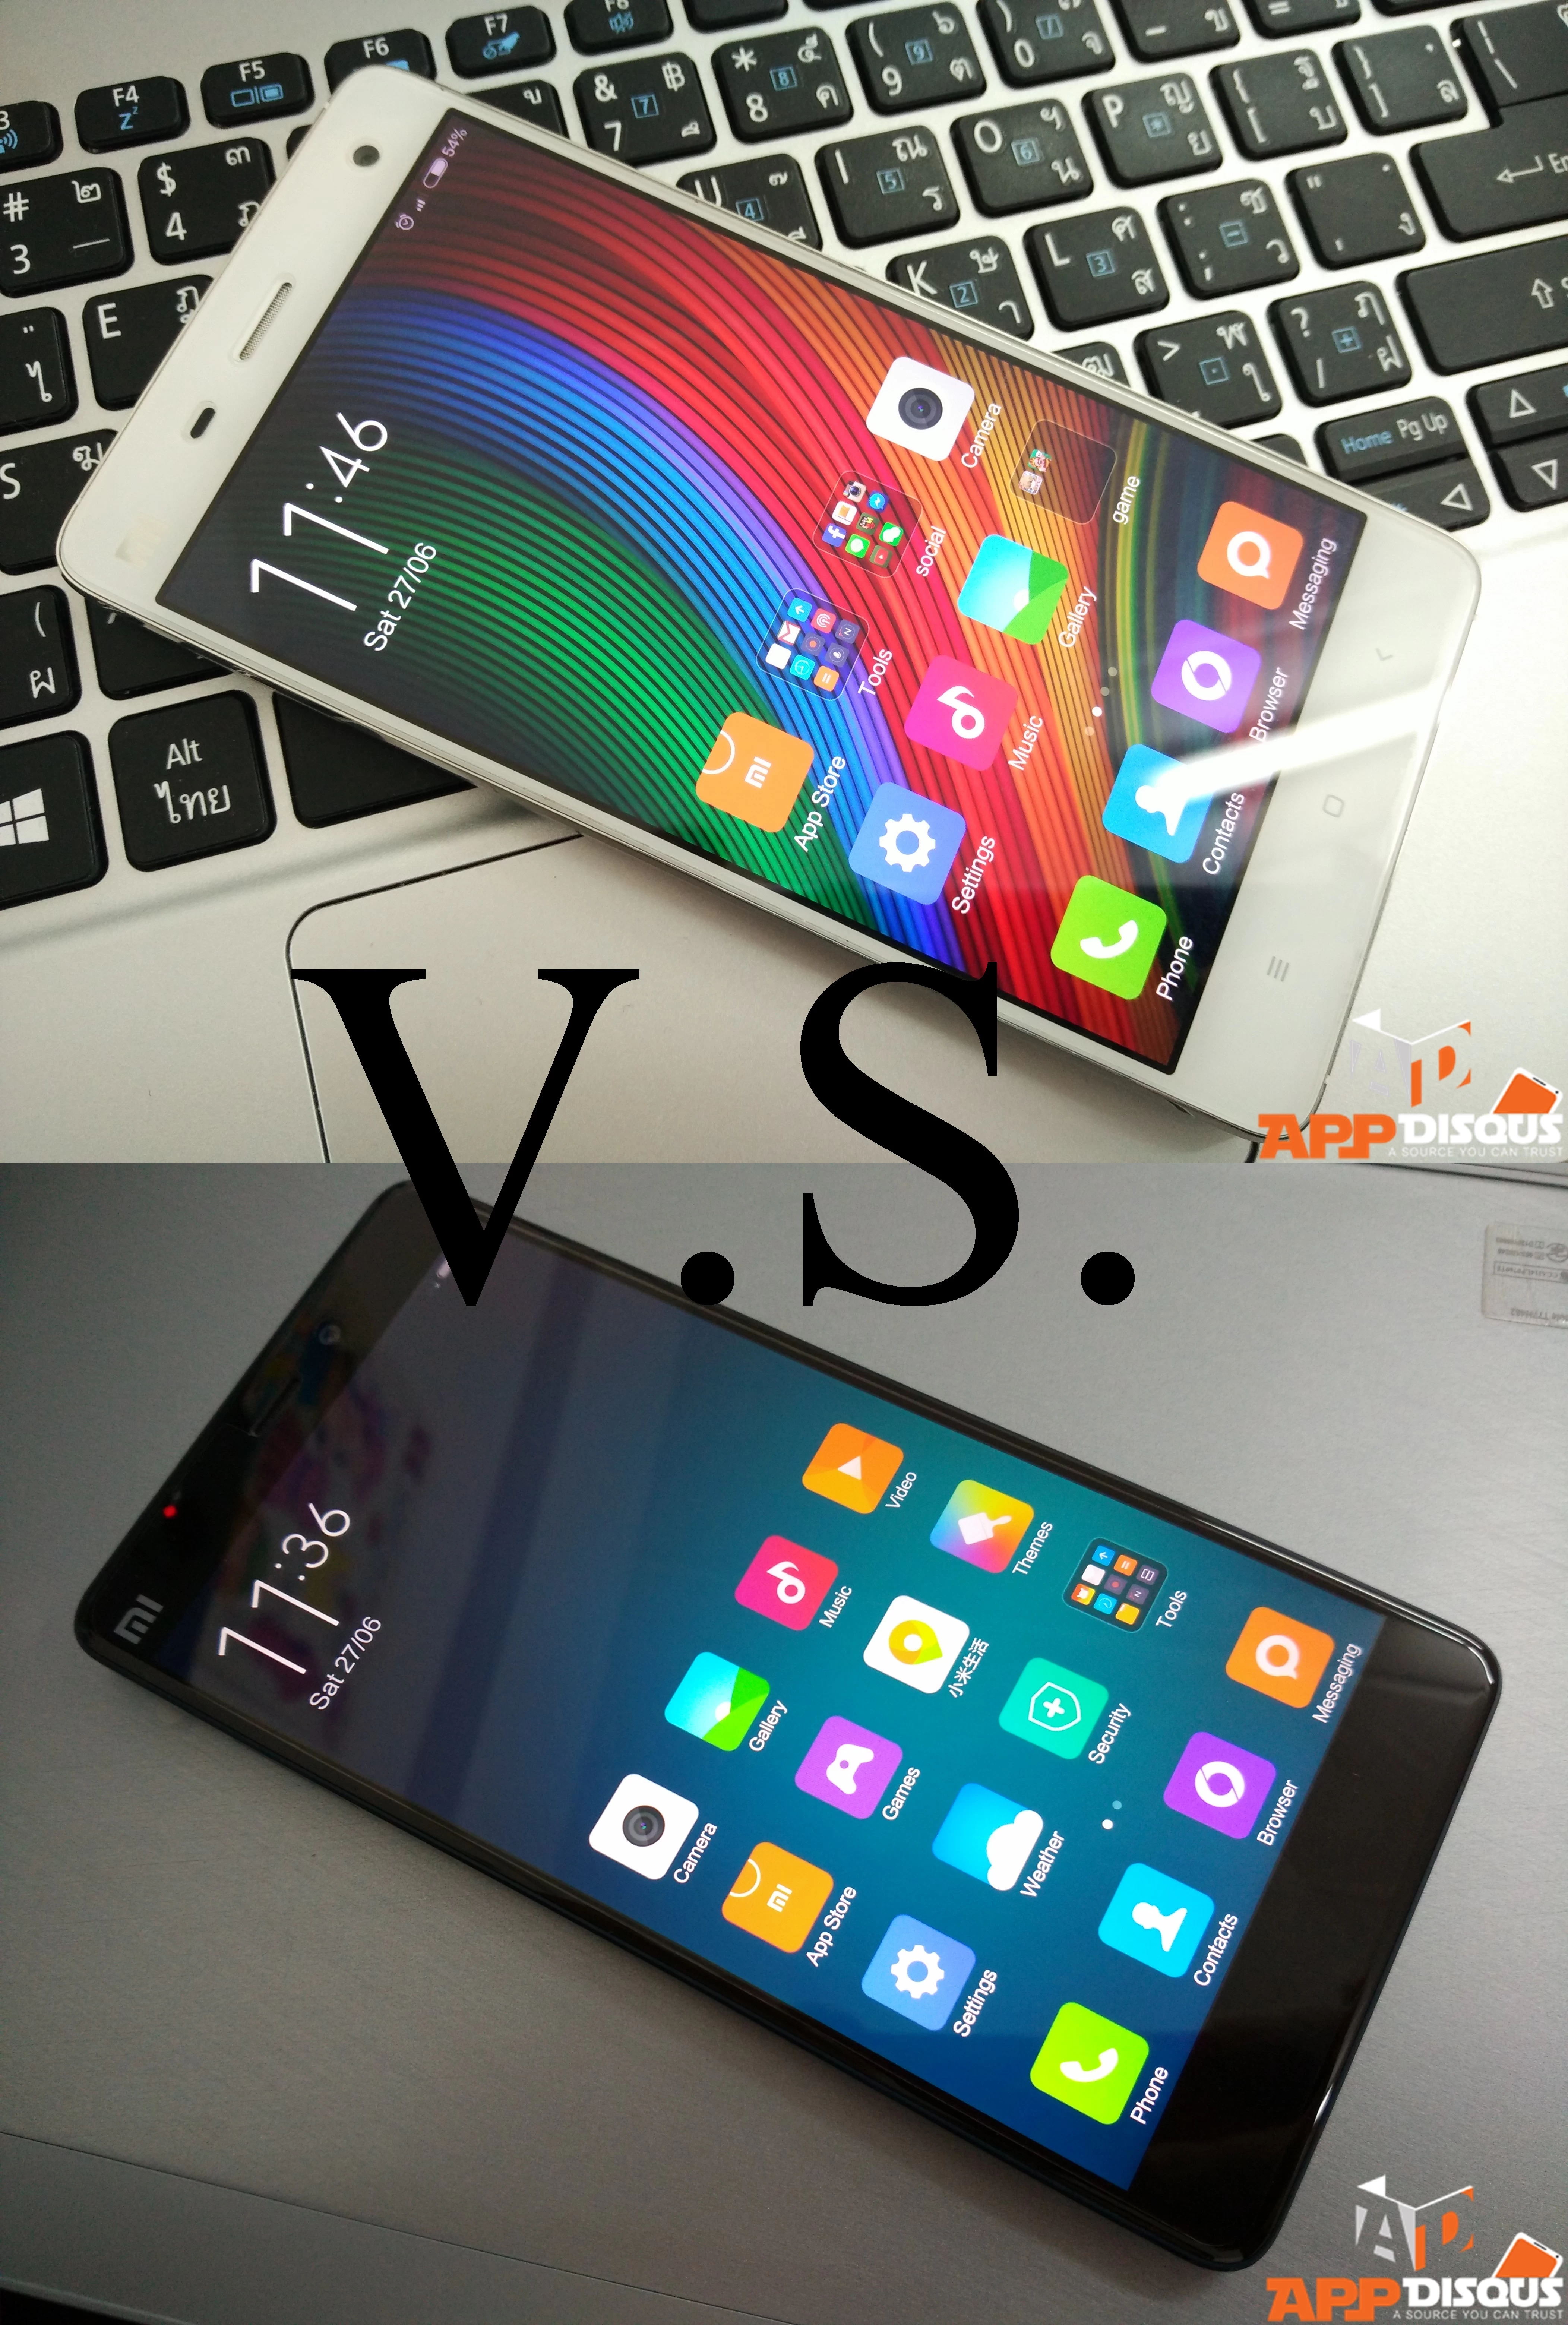 cats | Xiaomi MI Note | [เปรียบเทียบภาพถ่าย] ศึกสุดยอดกล้องแห่งแดนมังกร Xiaomi MI4 กับ Xiaomi MI Note ใช่ไม่ใช่ประชันกันที่ความชัด